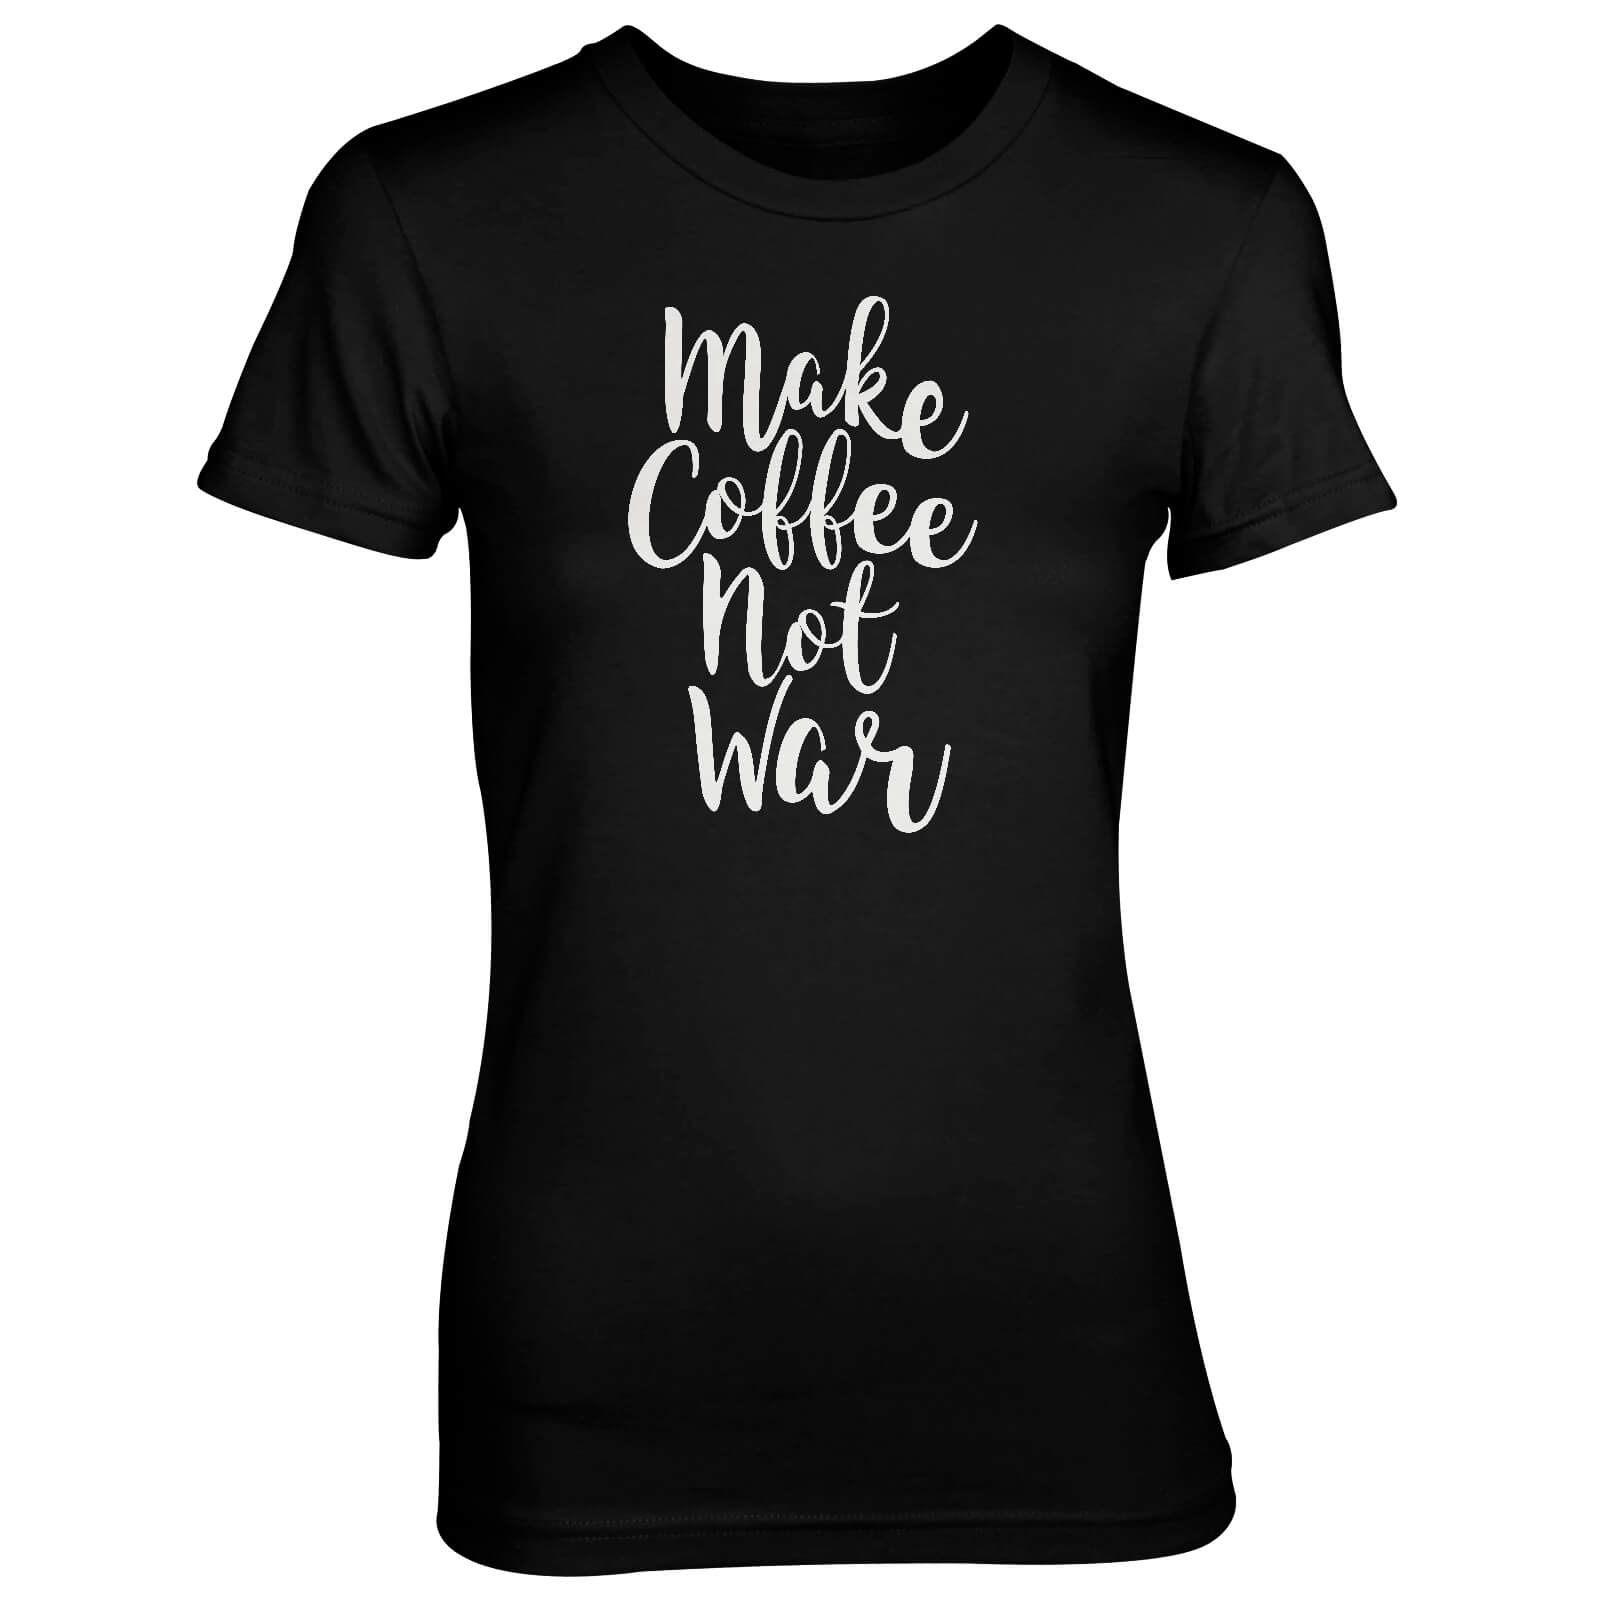 Make Coffee Not War Women's Black T-Shirt - S - Black